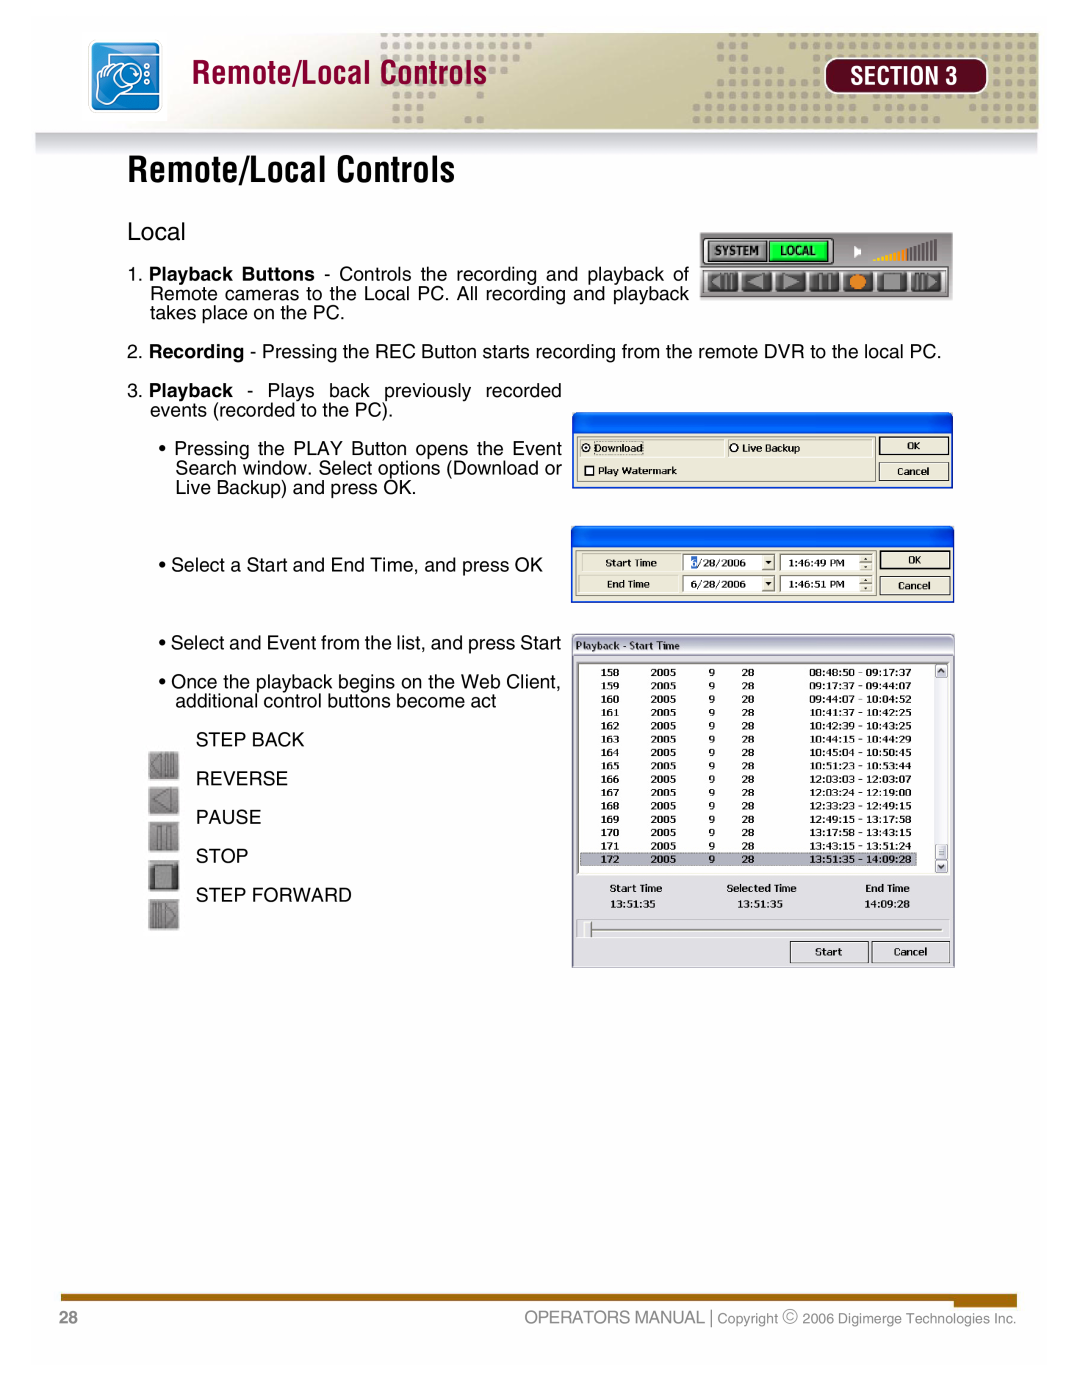 LOREX Technology DHU500 manual Remote/Local Controls, Section 